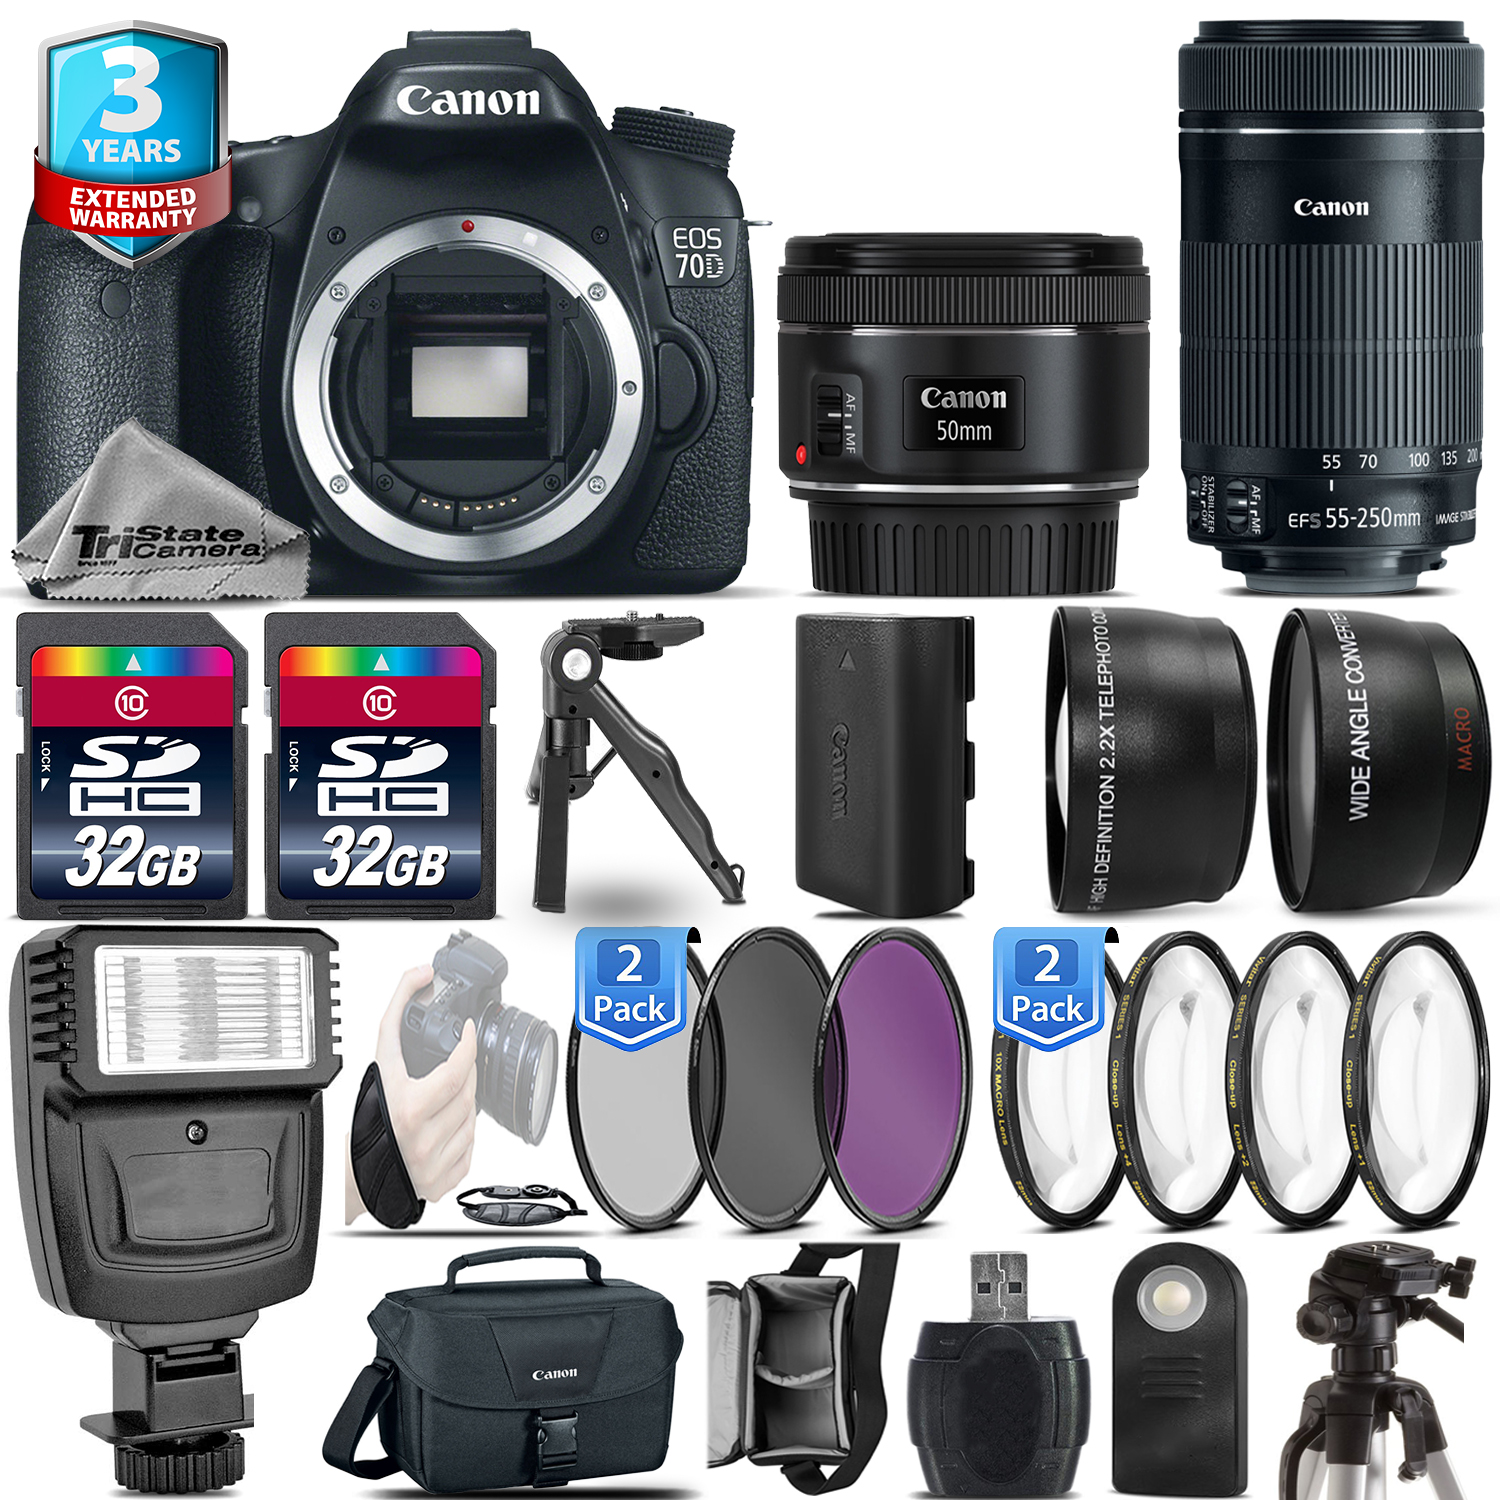 EOS 70D DSLR Camera + 50mm 1.8 STM + 55-250mm IS STM + 3yr Warranty *FREE SHIPPING*